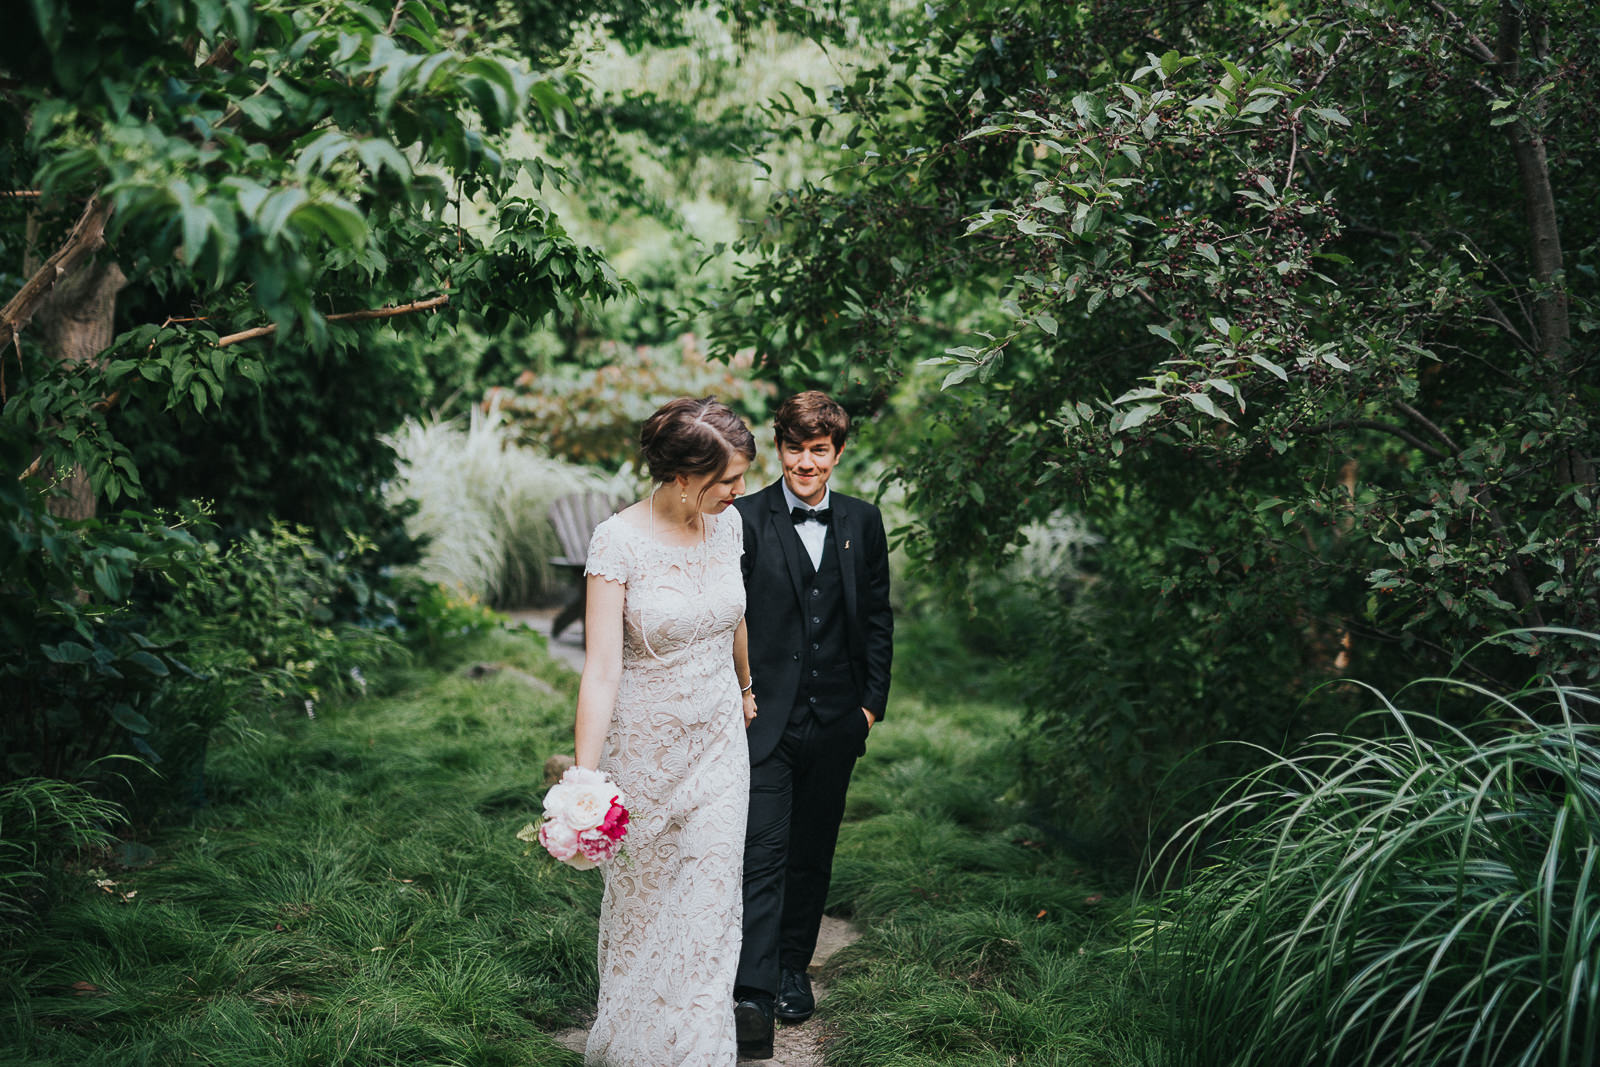 40 bride and groom walking through garden - Megan + Jon // Orpheum Wedding Photography in Madison